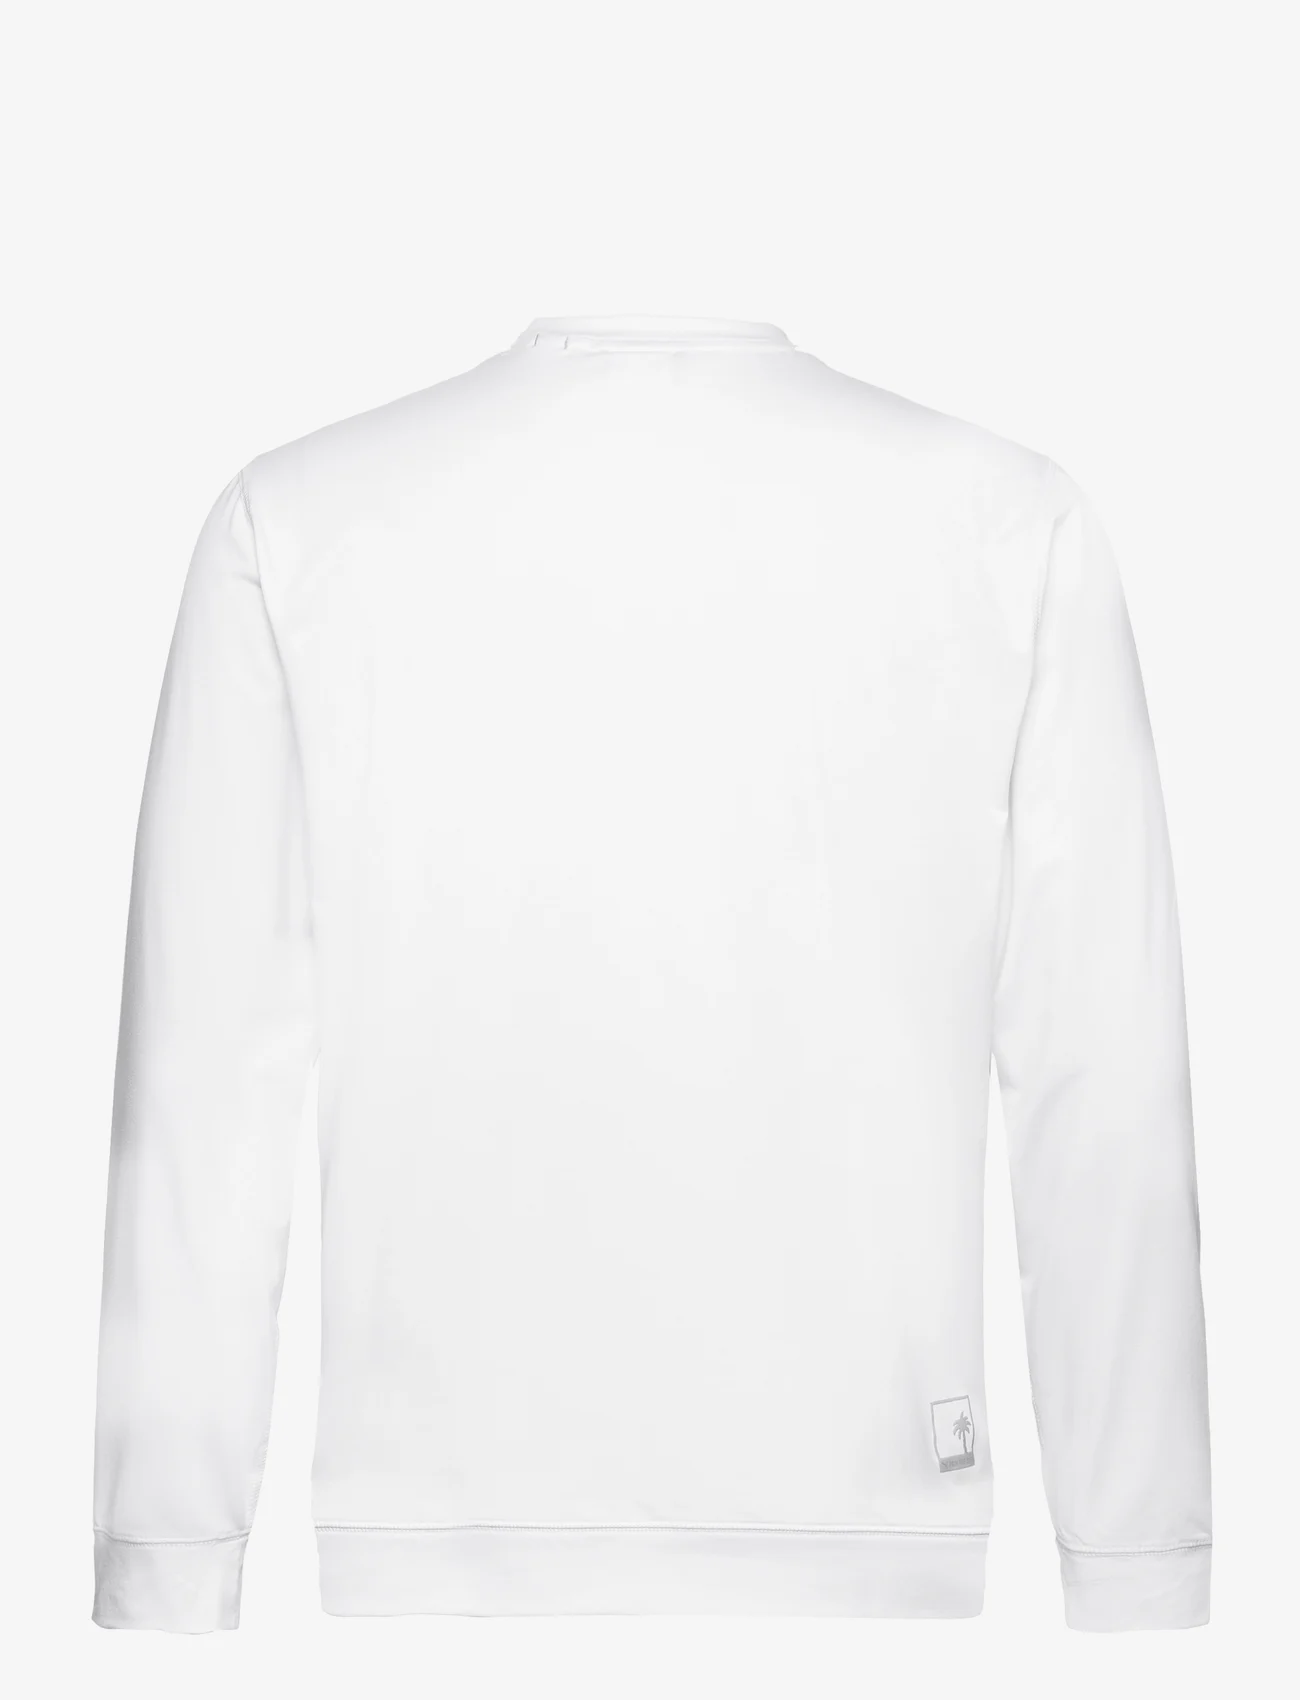 PUMA Golf - Puma x PTC Midweight Crewneck - sweatshirts - bright white - 1